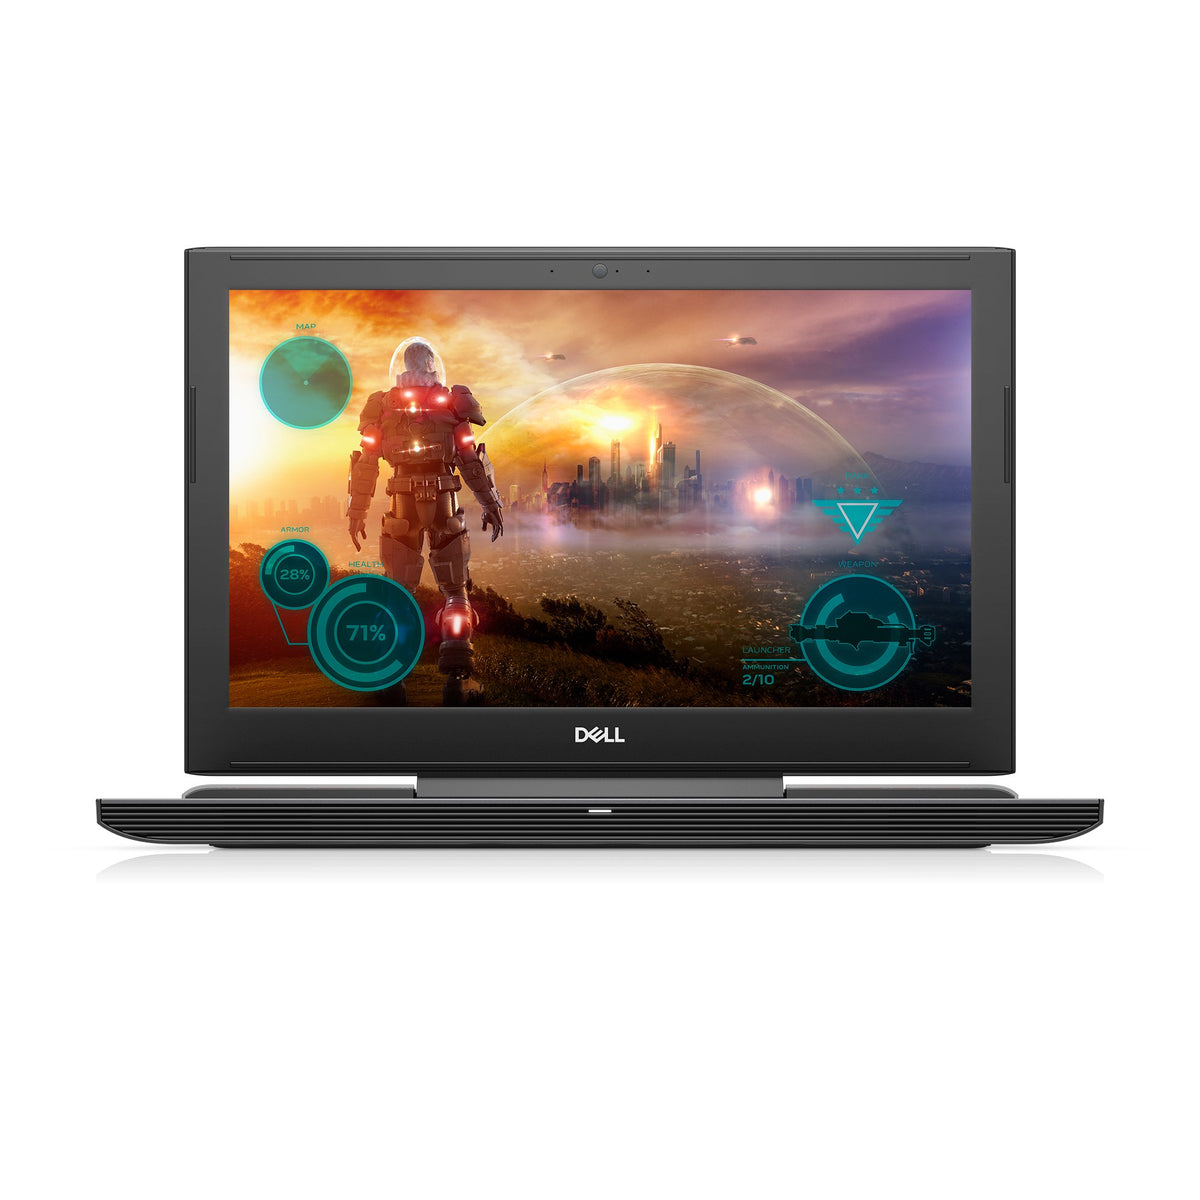 Dell Laptop - 7th Gen Intel Core i5, GTX 1060 6GB Graphics, 8GB Memory, 128GB SSD + 1TB HDD, 15.6", Matte Black